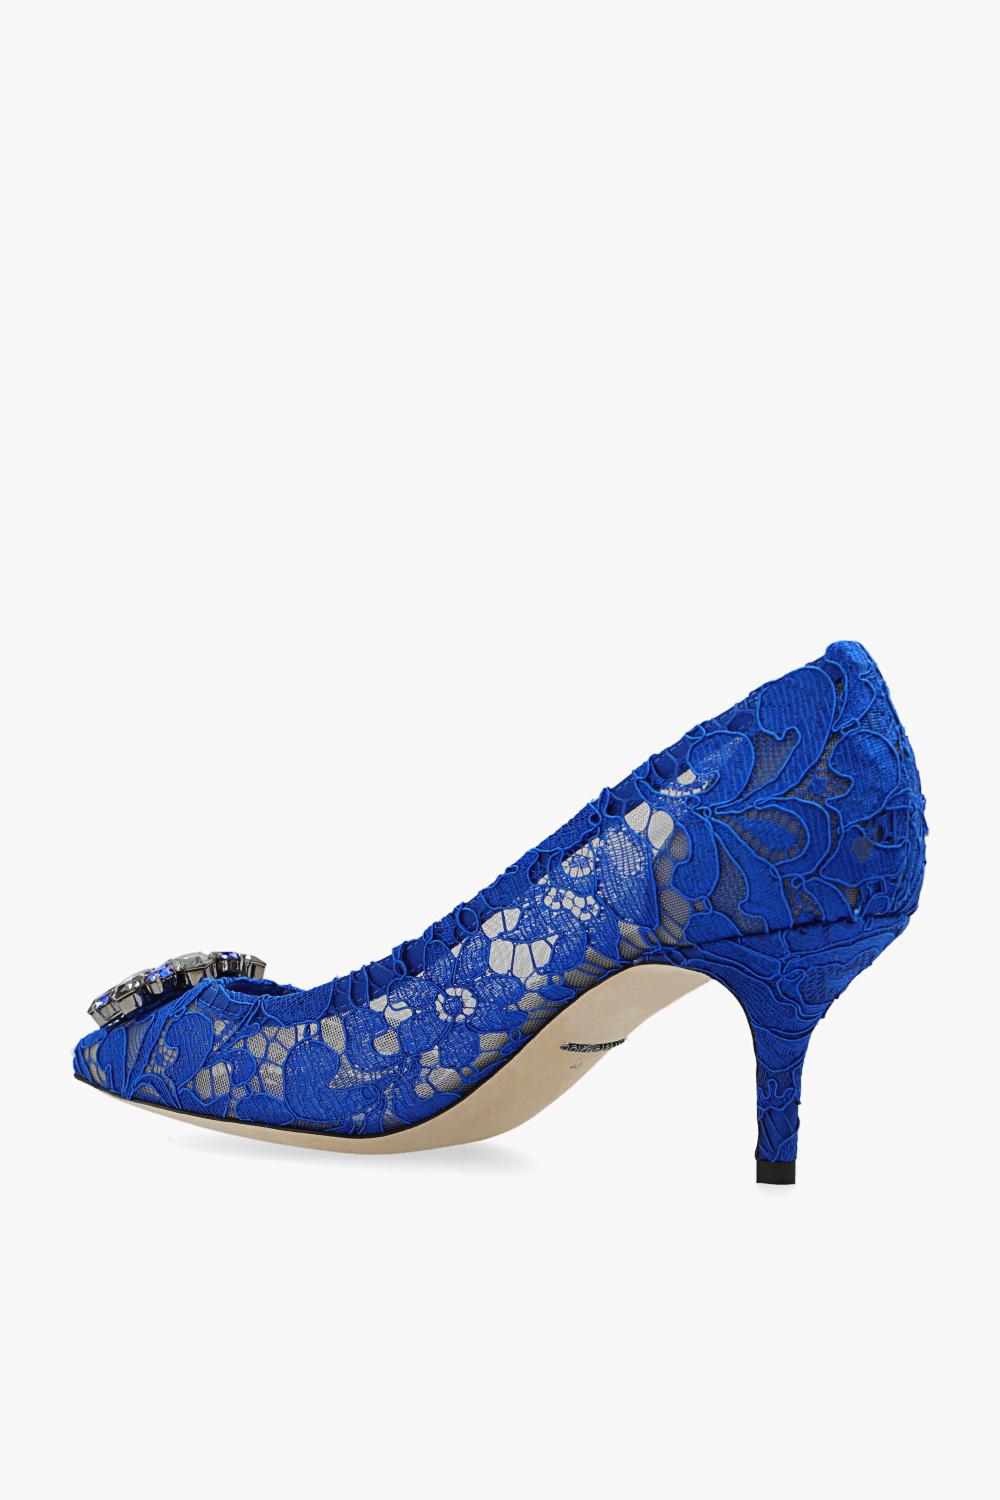 Dolce & Gabbana 'bellucci' Lace Stiletto Pumps in Blue | Lyst